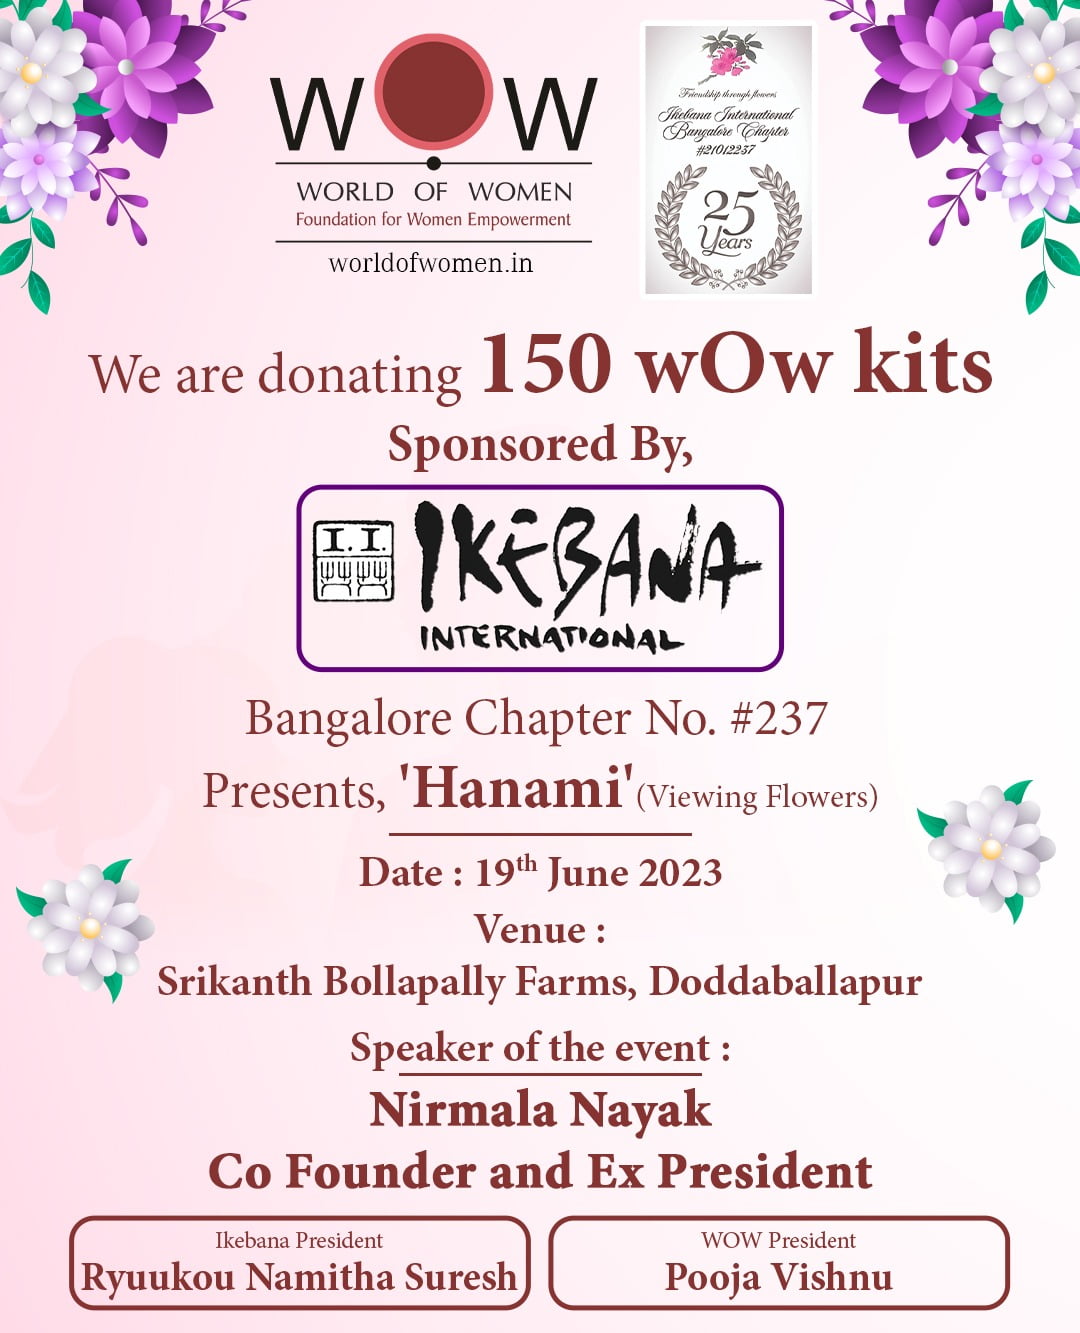 Wow donating kits to 150 women